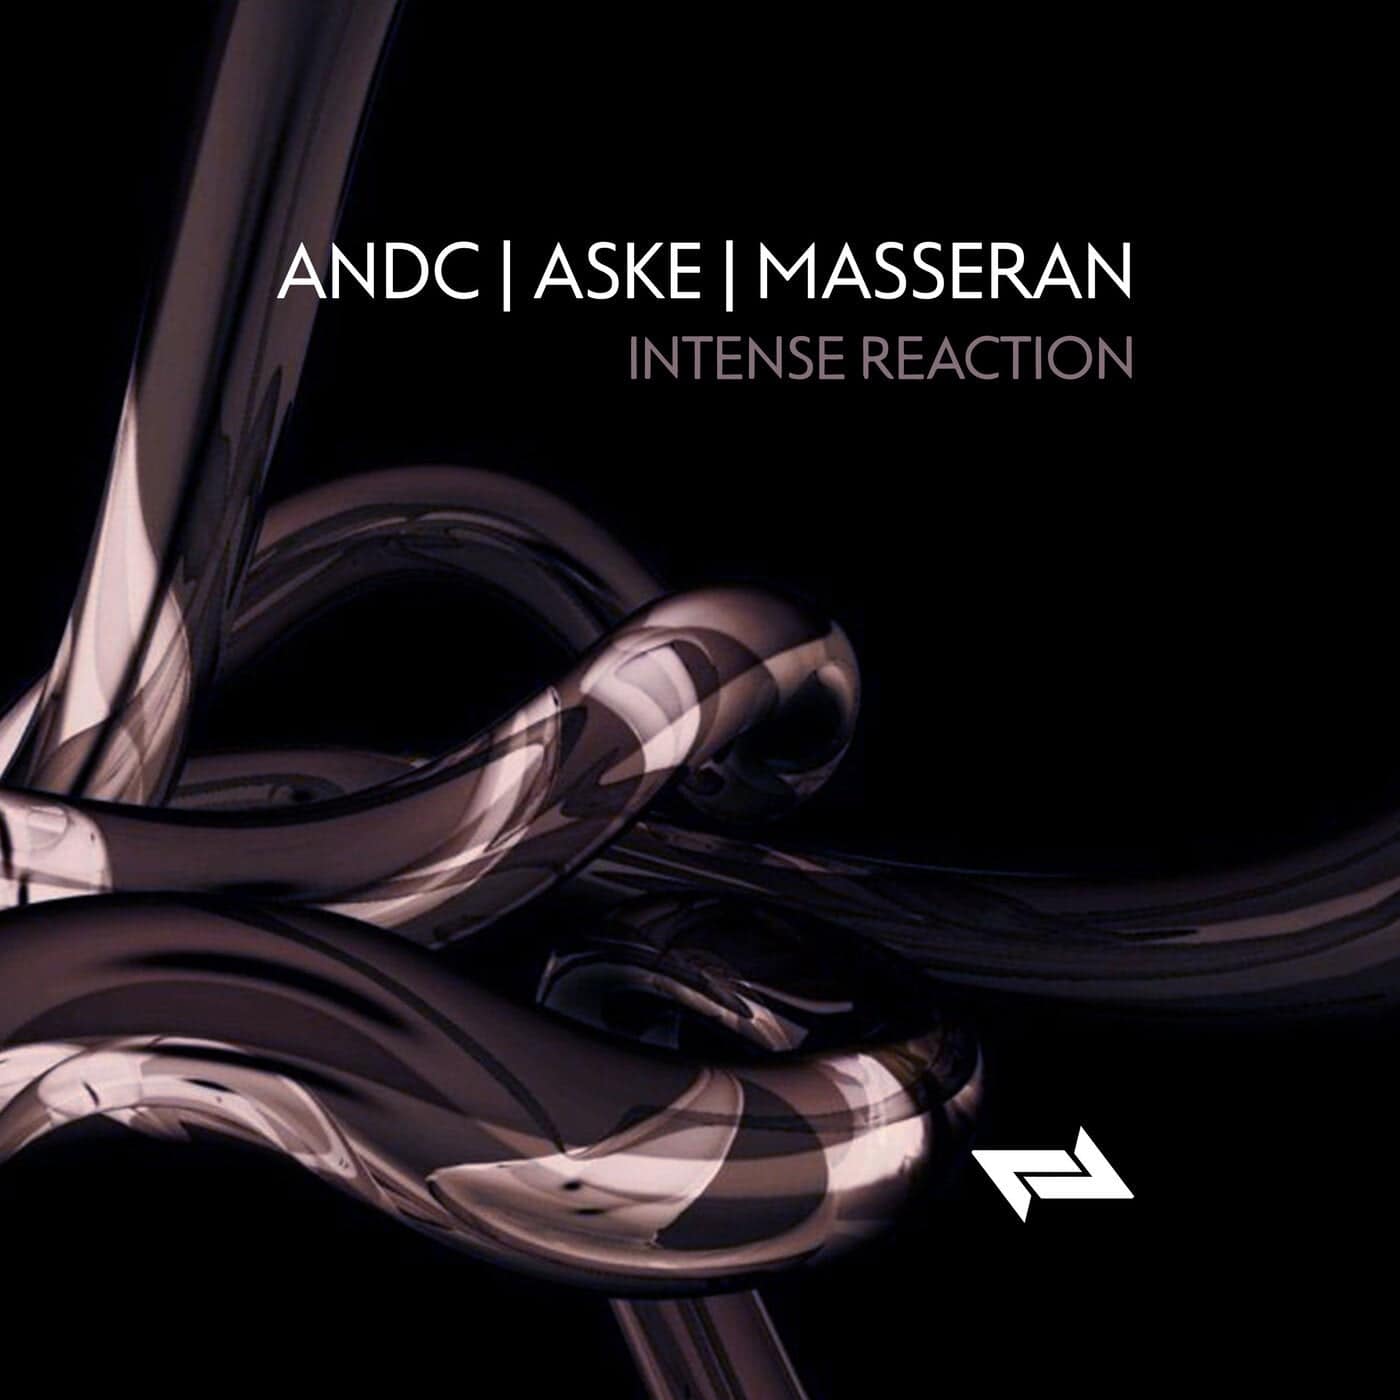 image cover: Andc, ASKE, Masseran - Intense Reaction / LBRT24